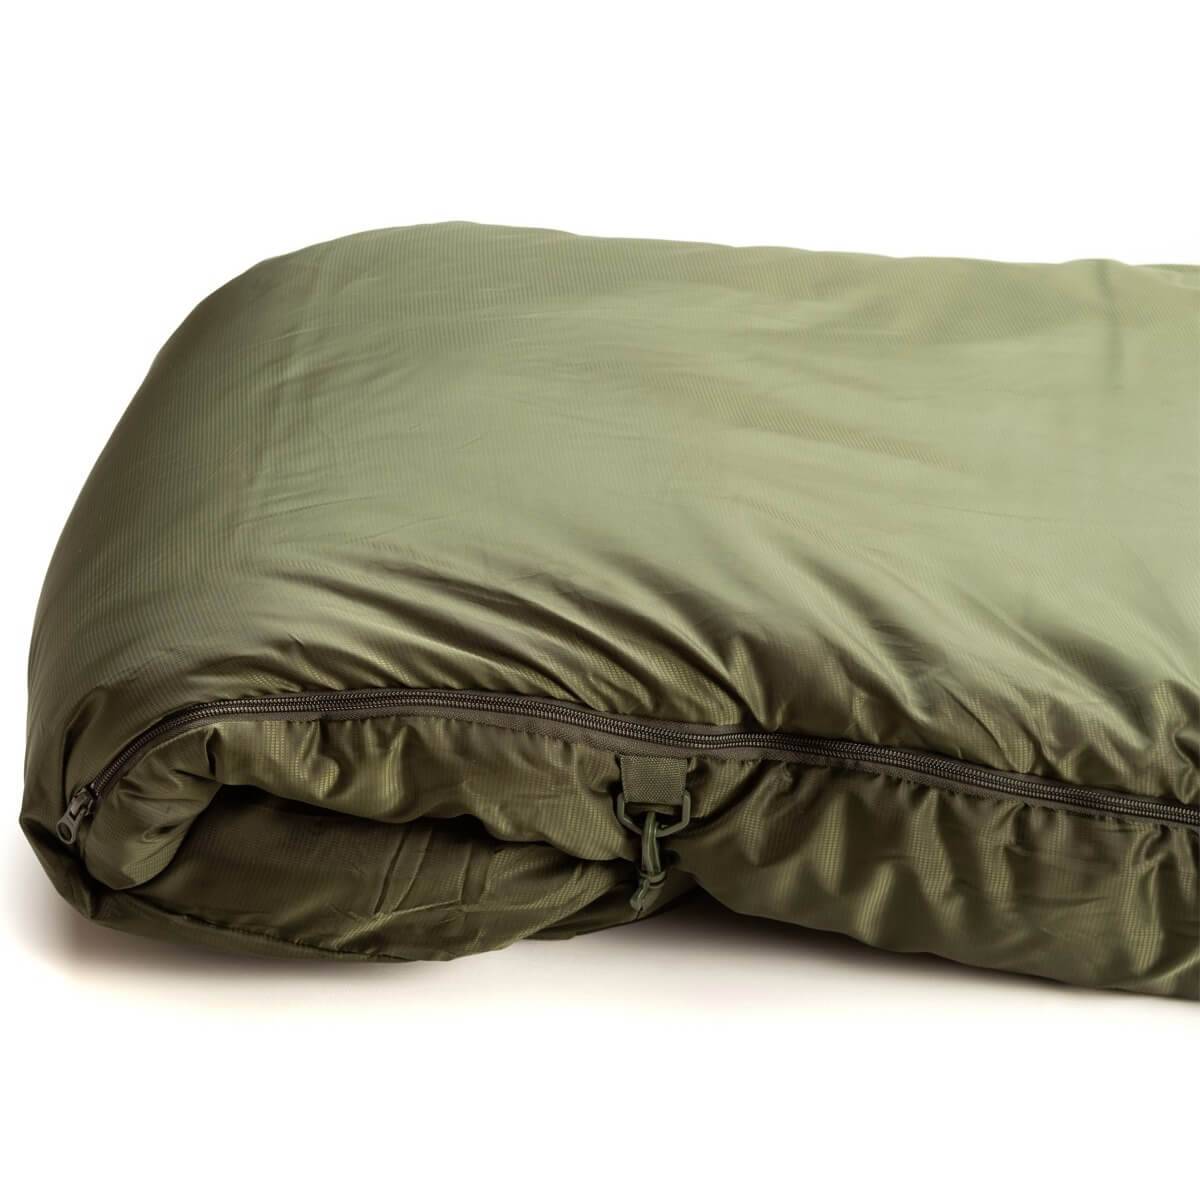 Snugpak Softie Elite 4 Sleeping Bag Olive Green - John Bull Clothing